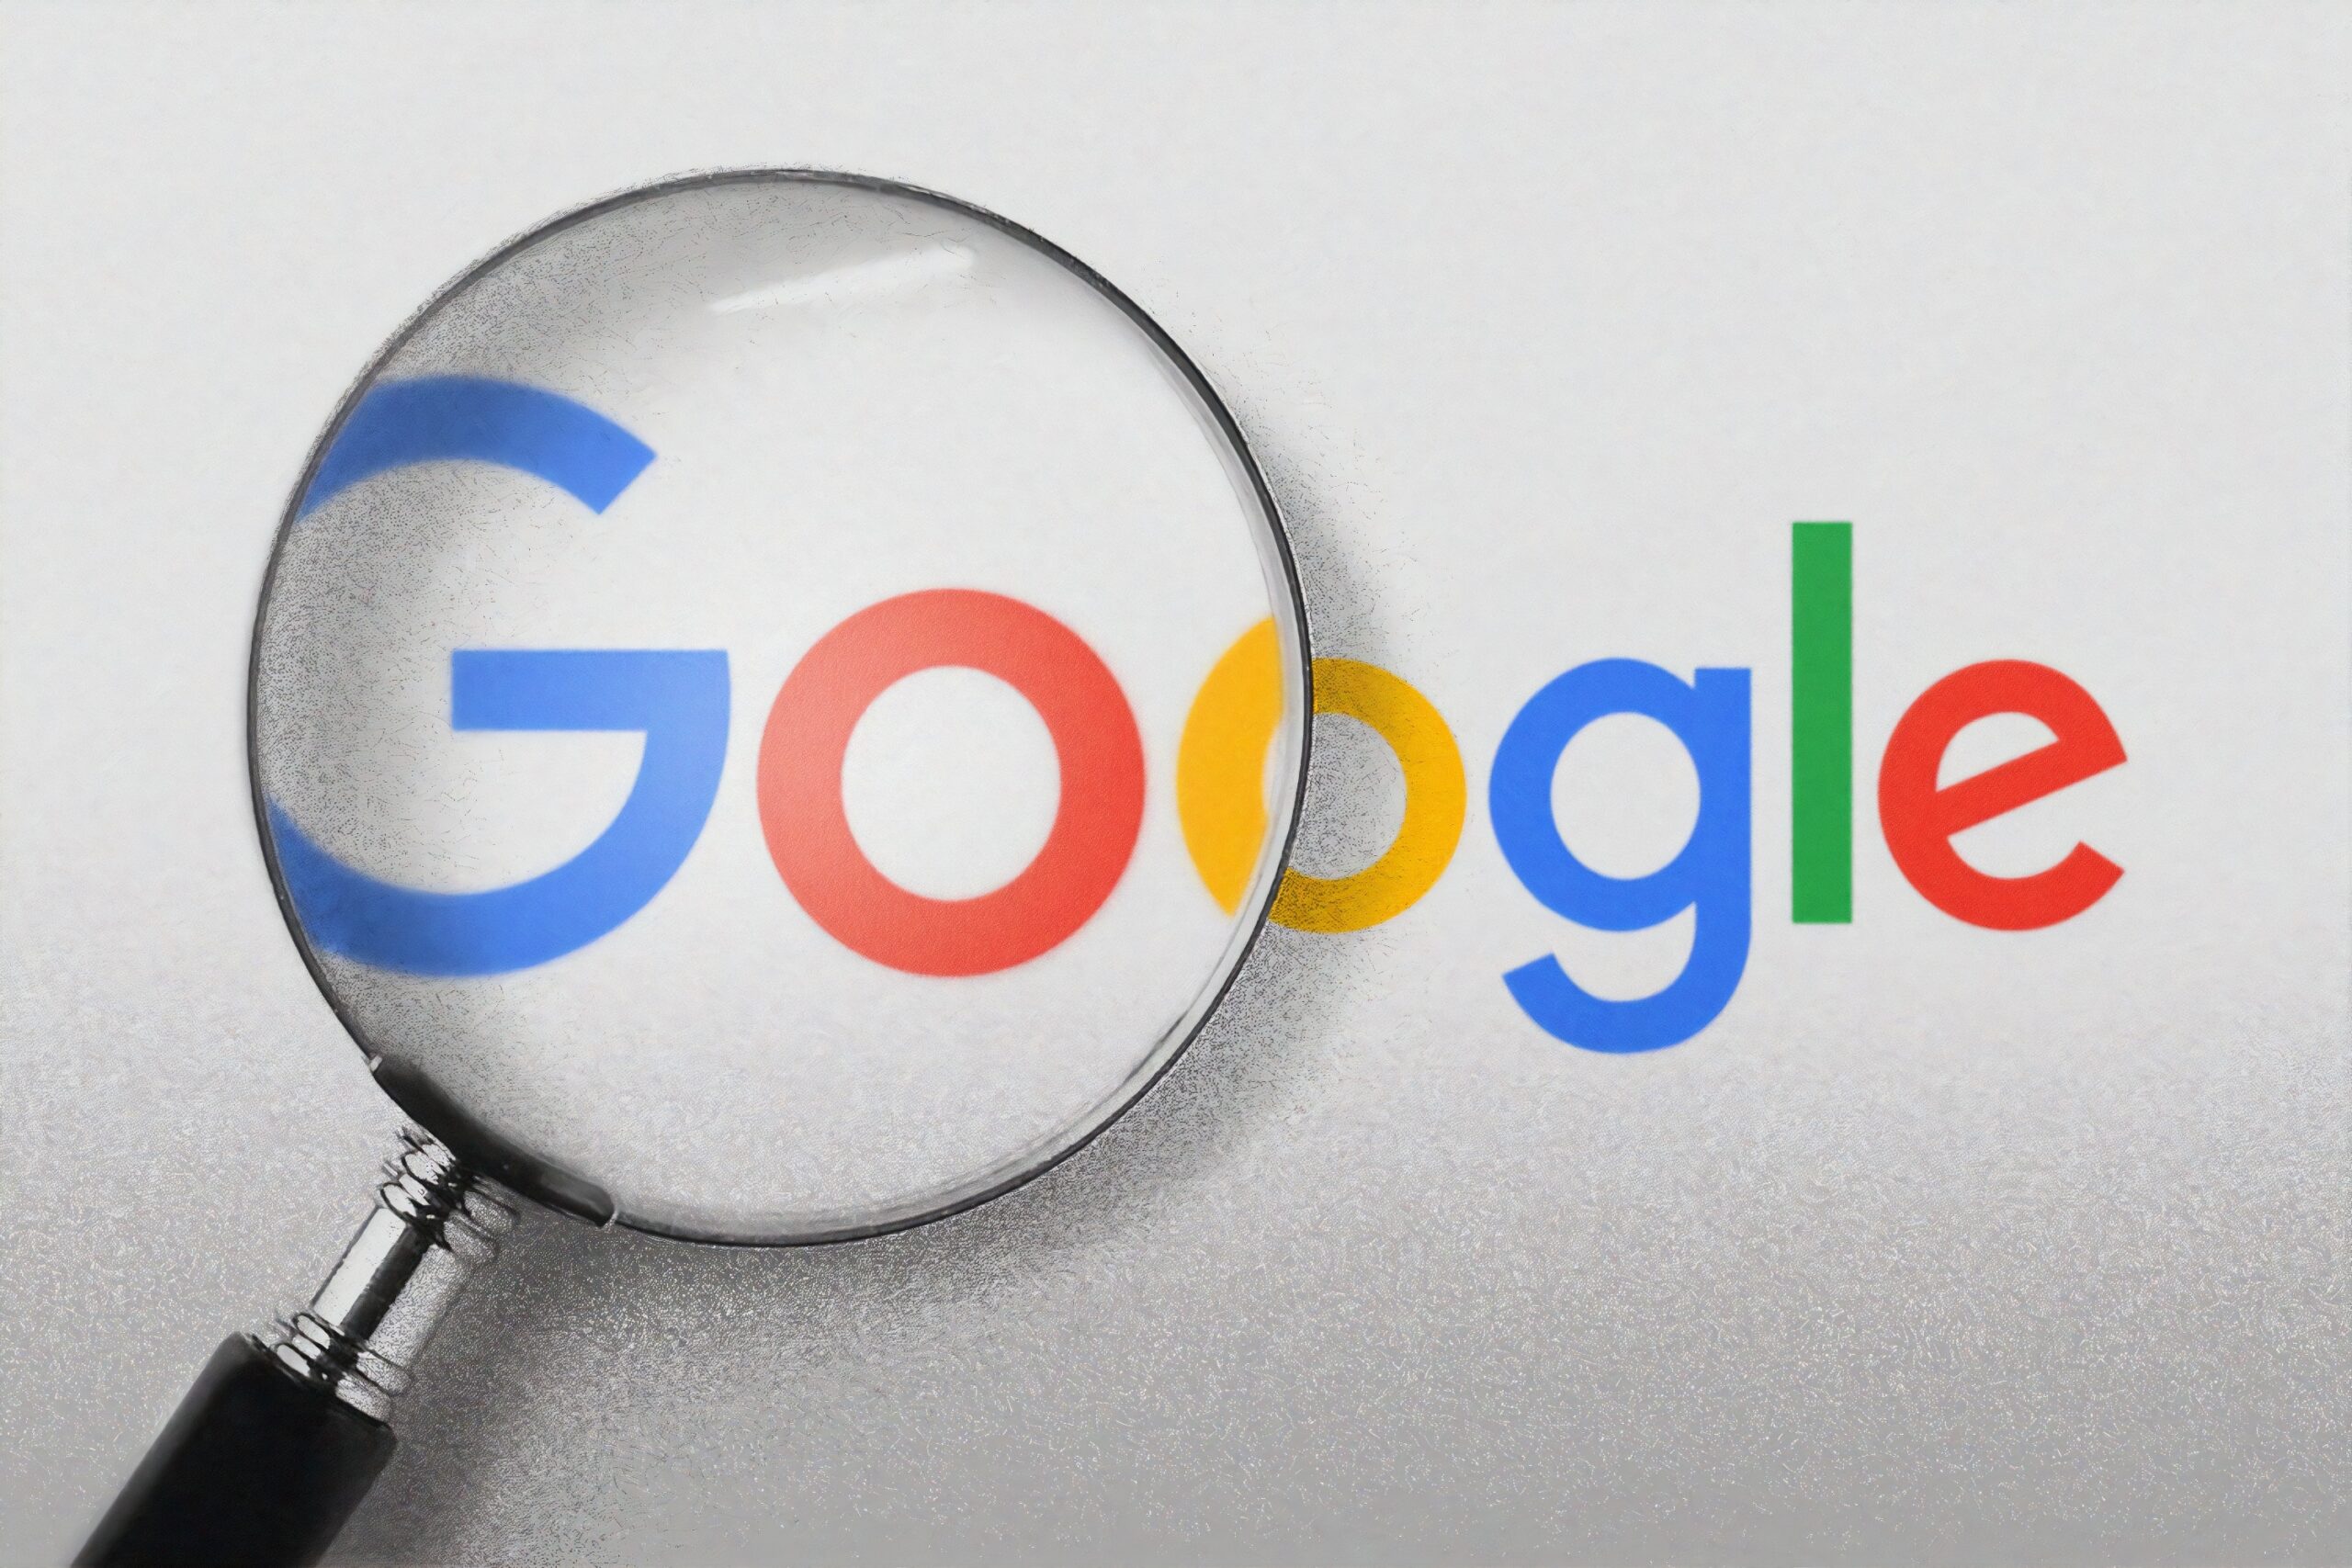 white and blue google logo